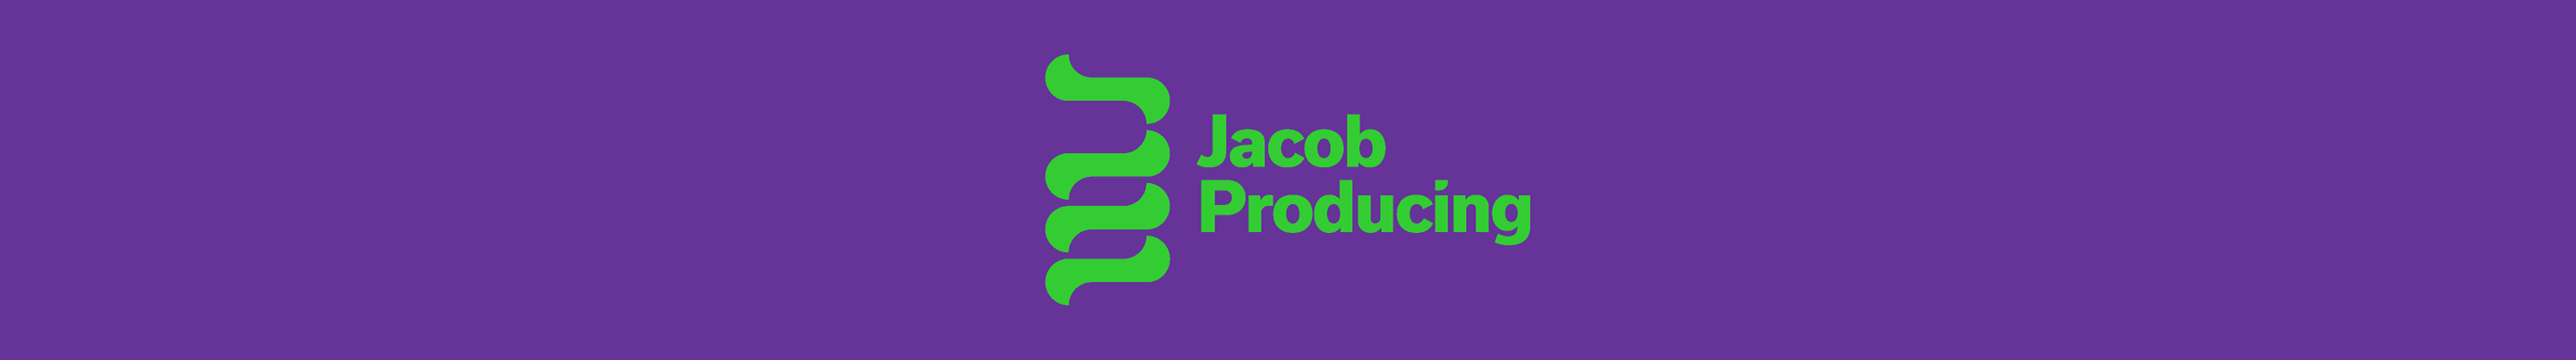 Banner de perfil de Jacob Schofield